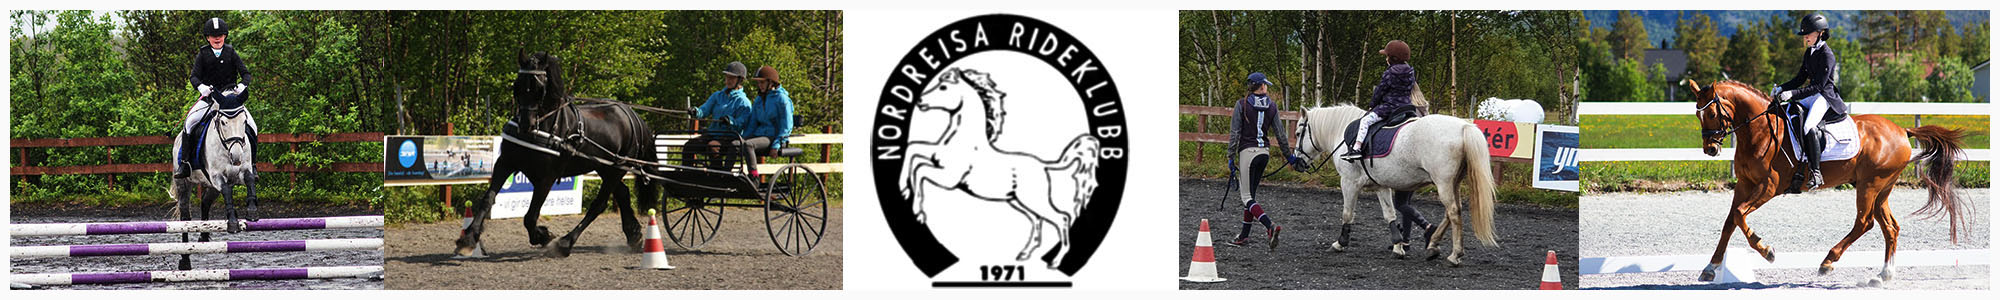 Nordreisa rideklubb logo